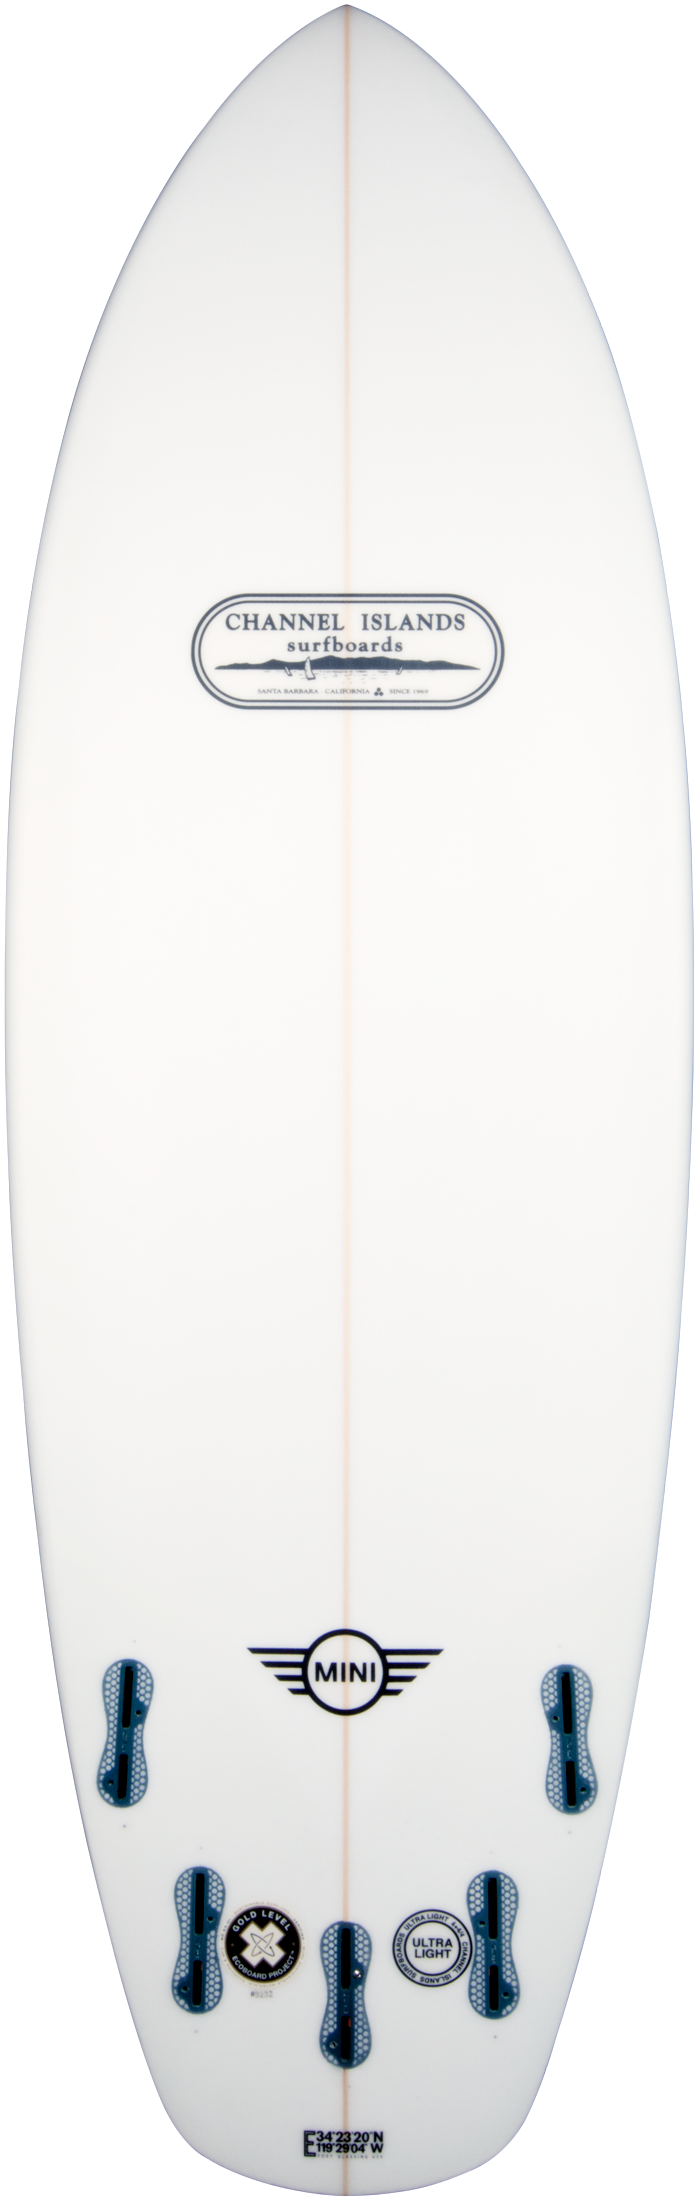 Mini Eco-hybrid – Channel Islands Surfboards